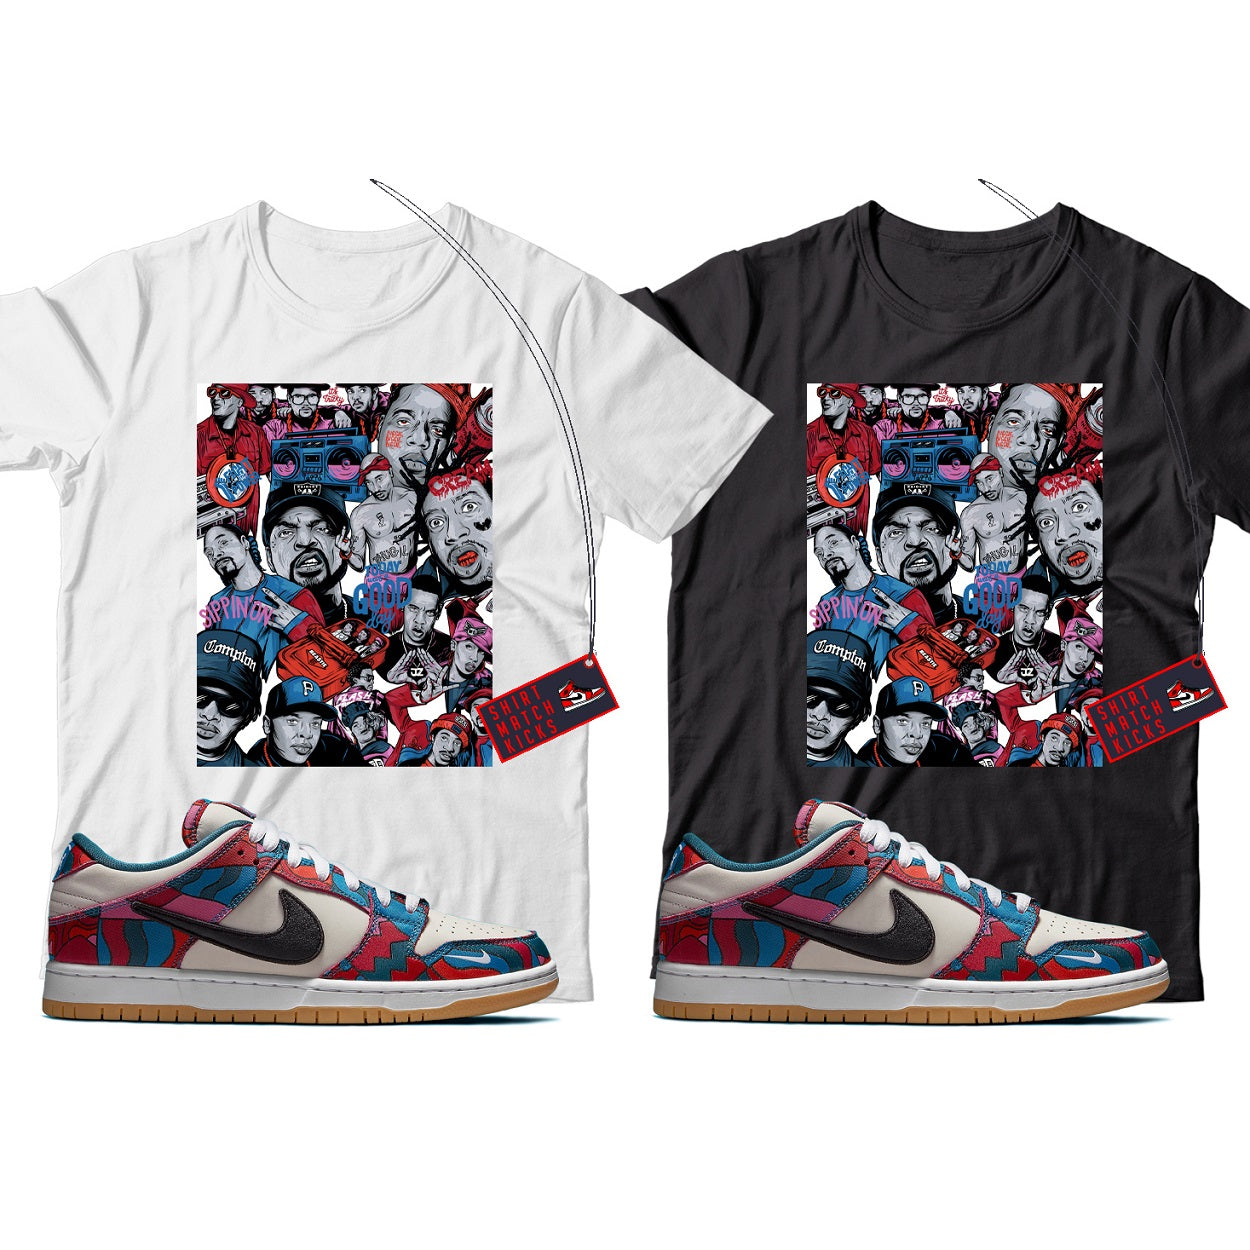 Rap(2) T-Shirt Match Nike SB Dunk Low Pro Parra Abstract Art